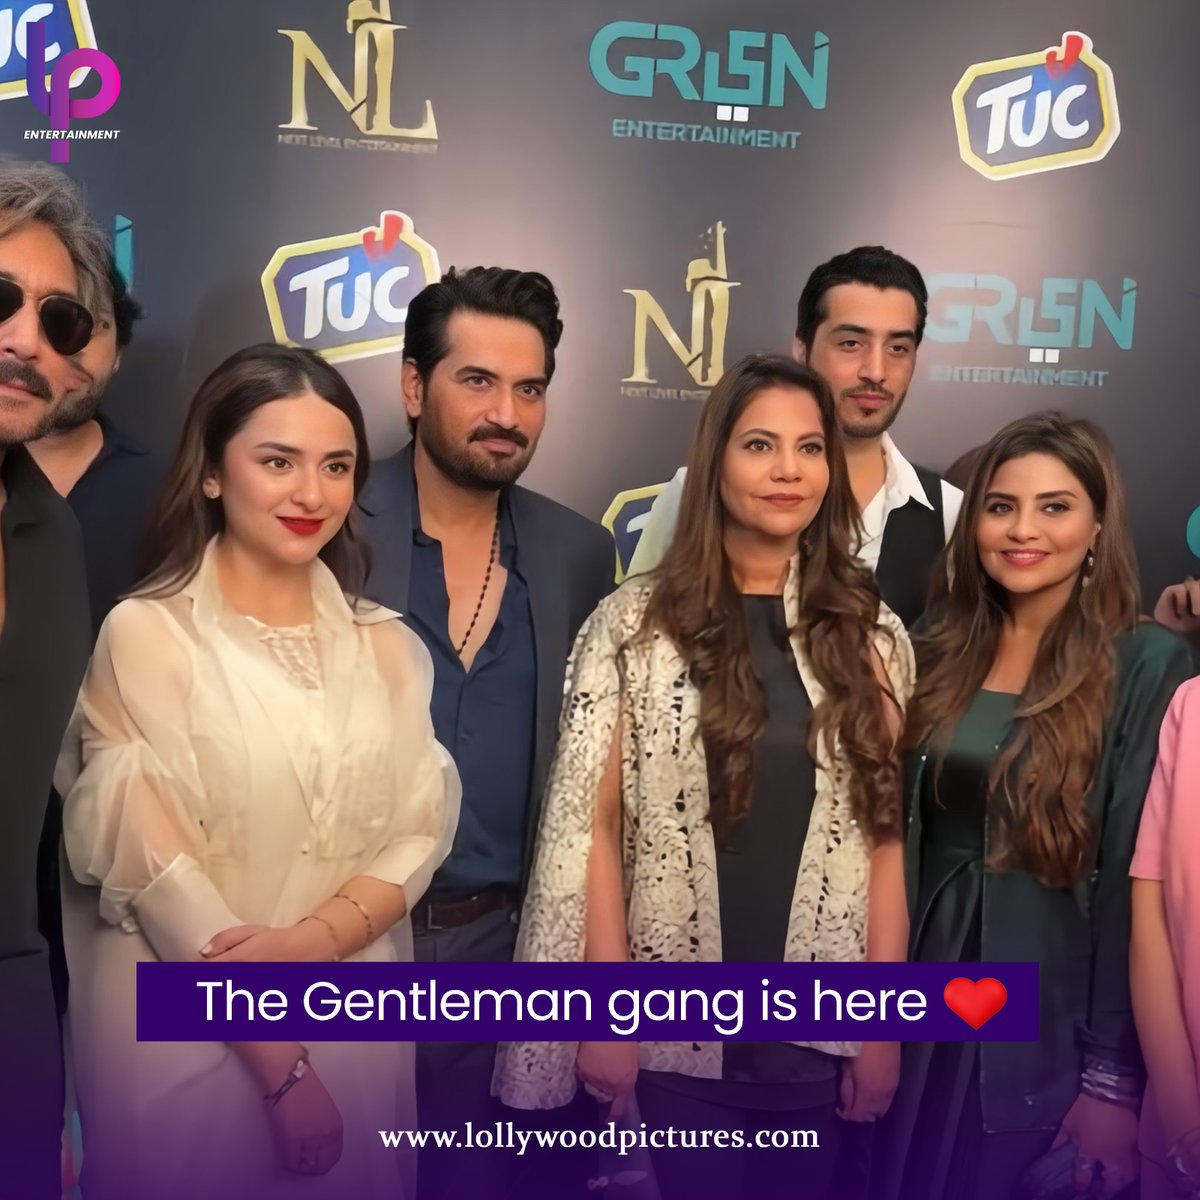 The Gentleman gang is here at the grand premiere of Gentleman happening now in Karachi. 🔥🤩 #YumnaZaidi #HumayunSaeed #AdnanSiddiqui #LPEntertainment #Celebrities